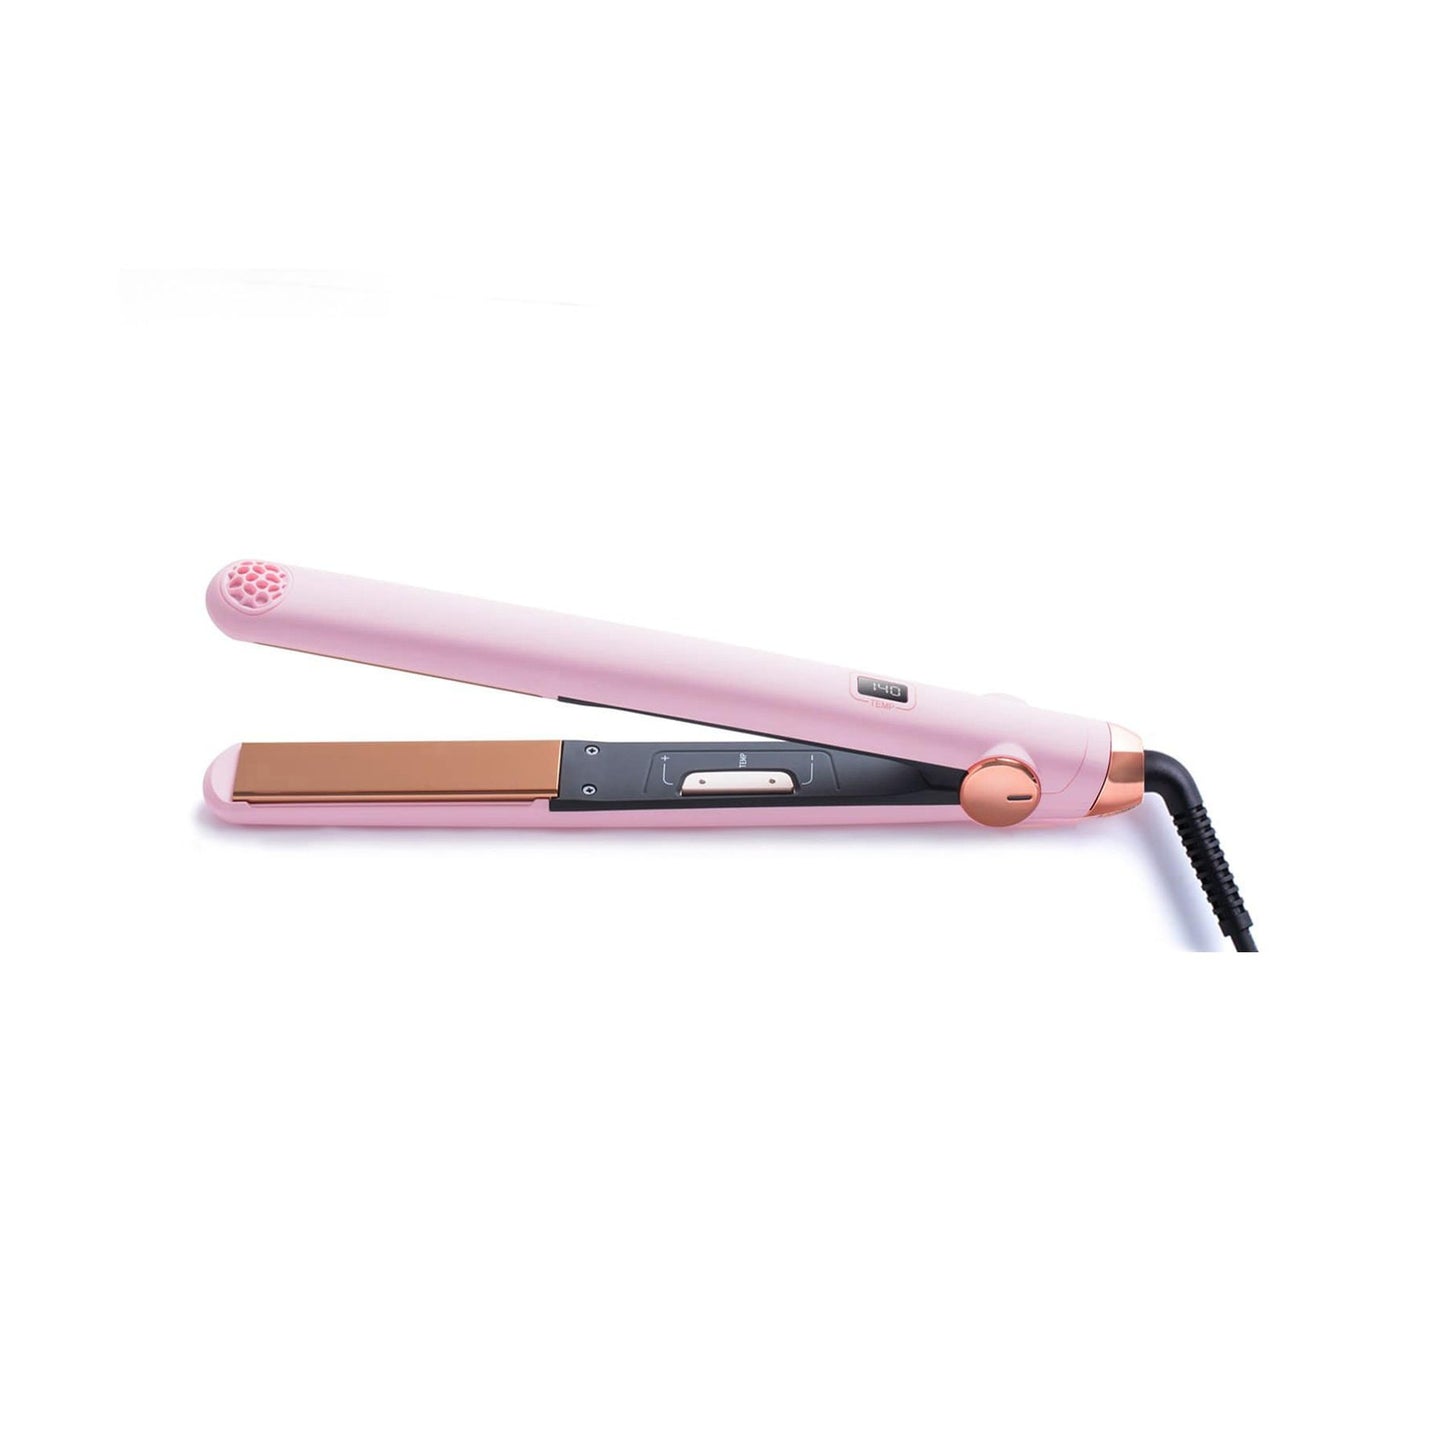 Elegant pink TYMO SWAY hair flat iron showcasing a modern design for precision hair styling.